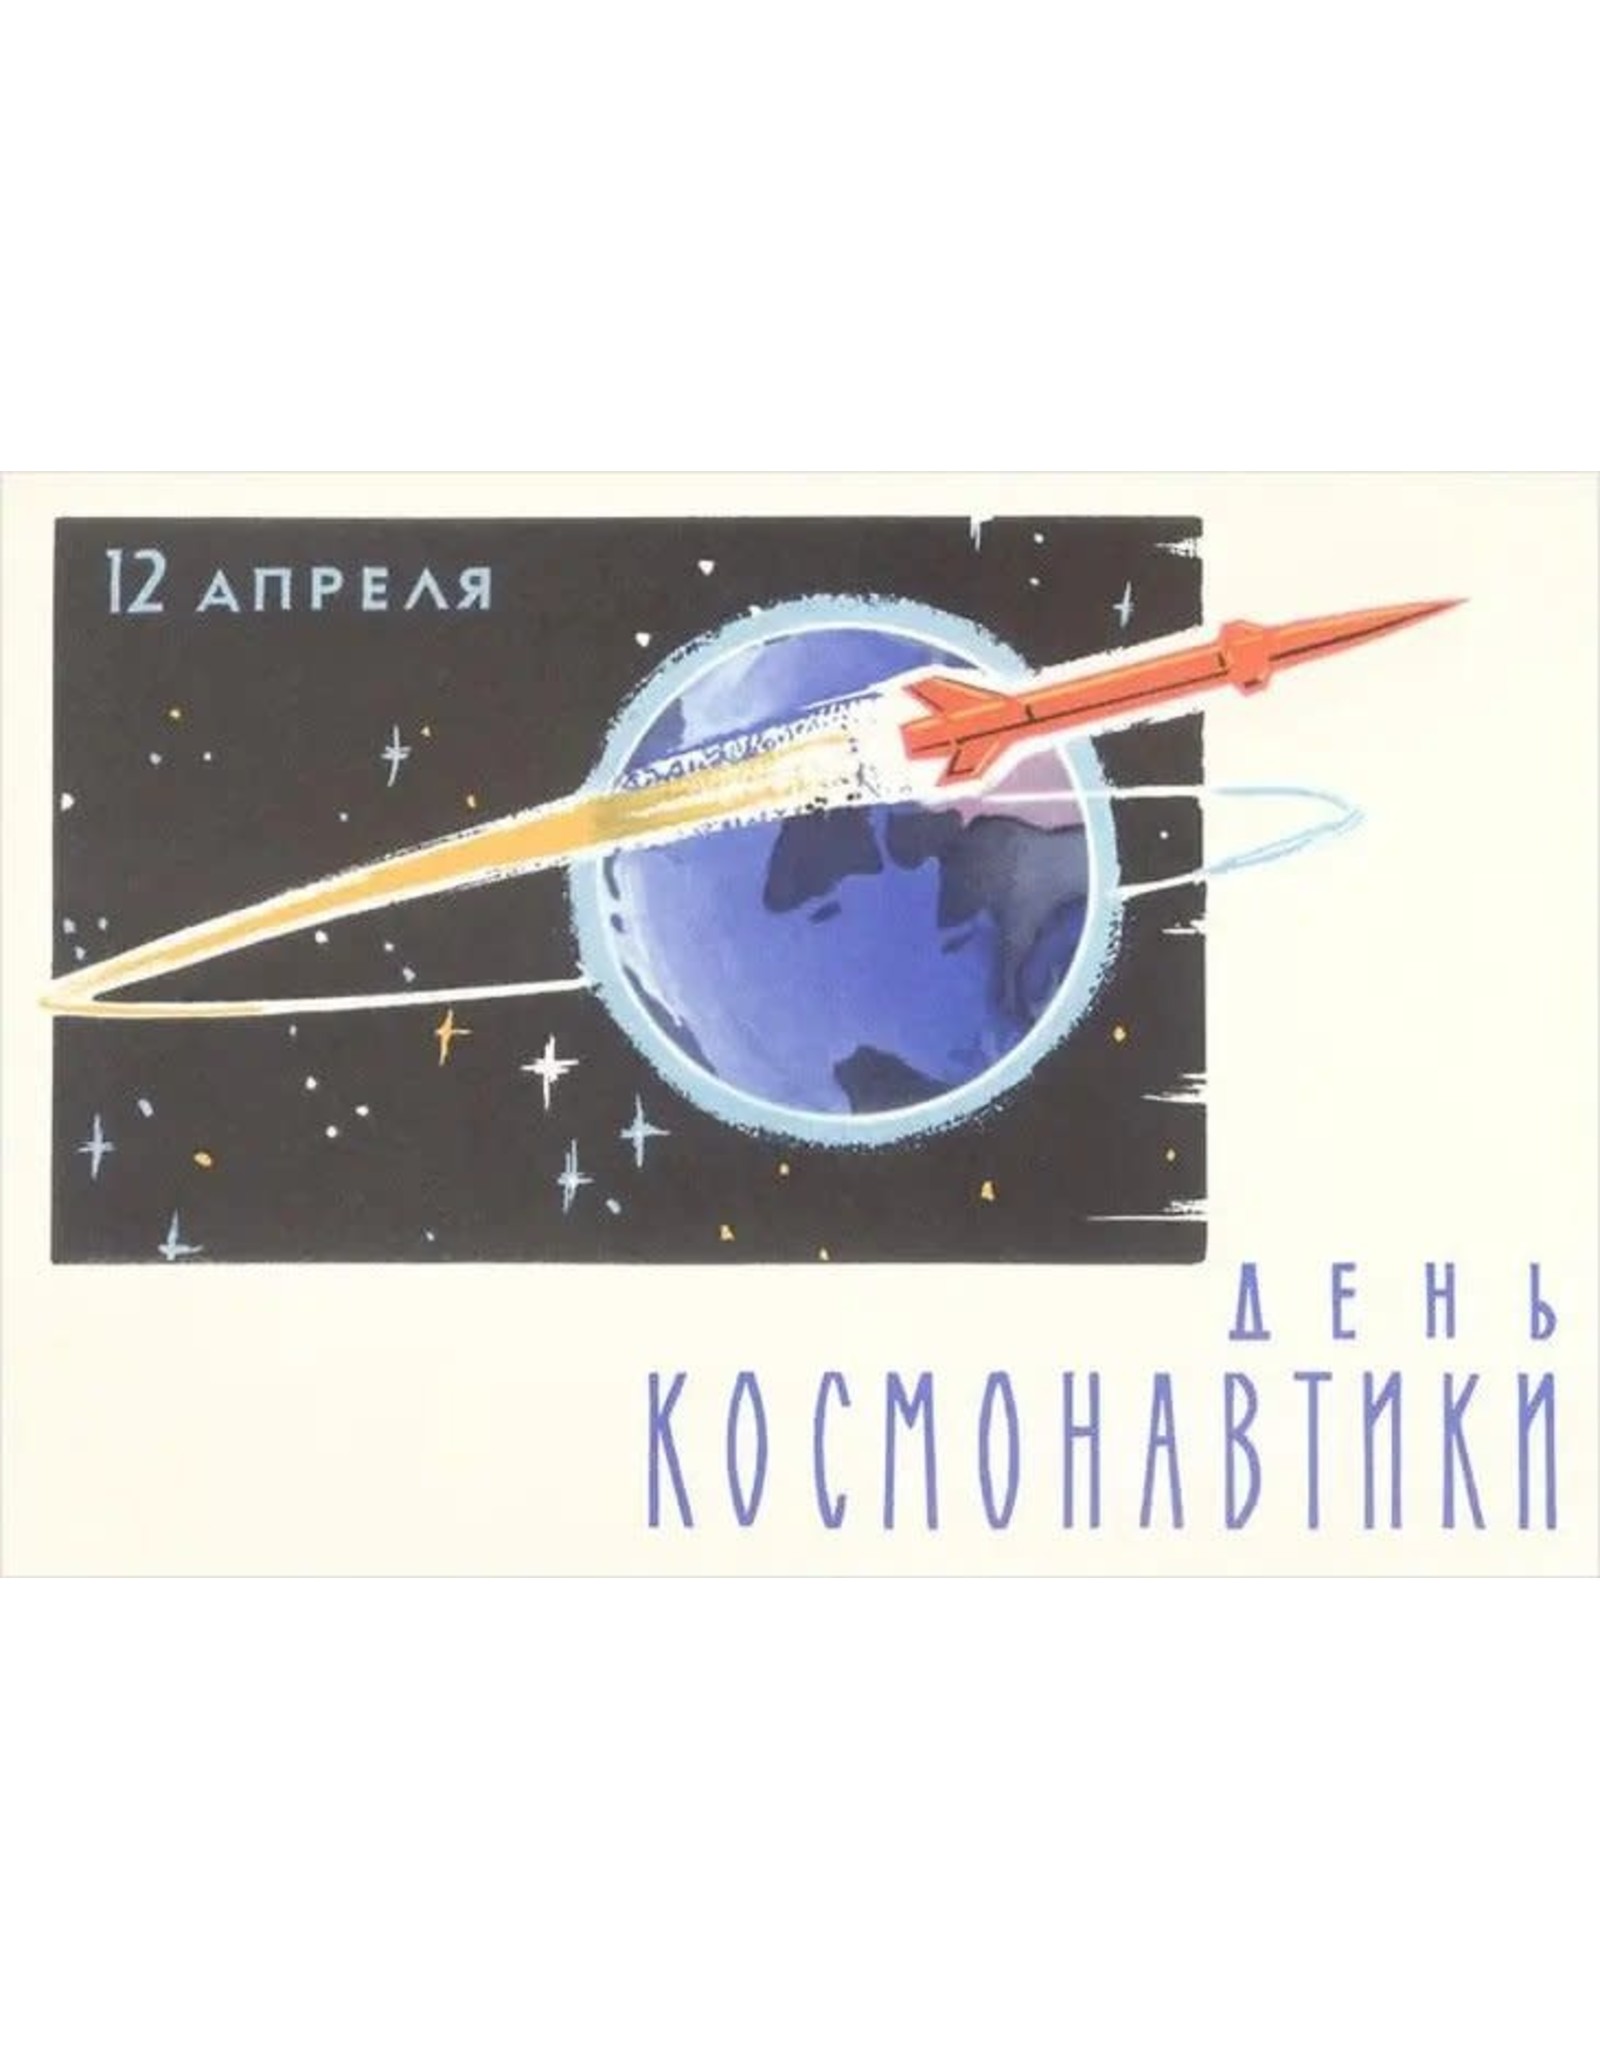 Soviet Cosmonauts Day Blank Card